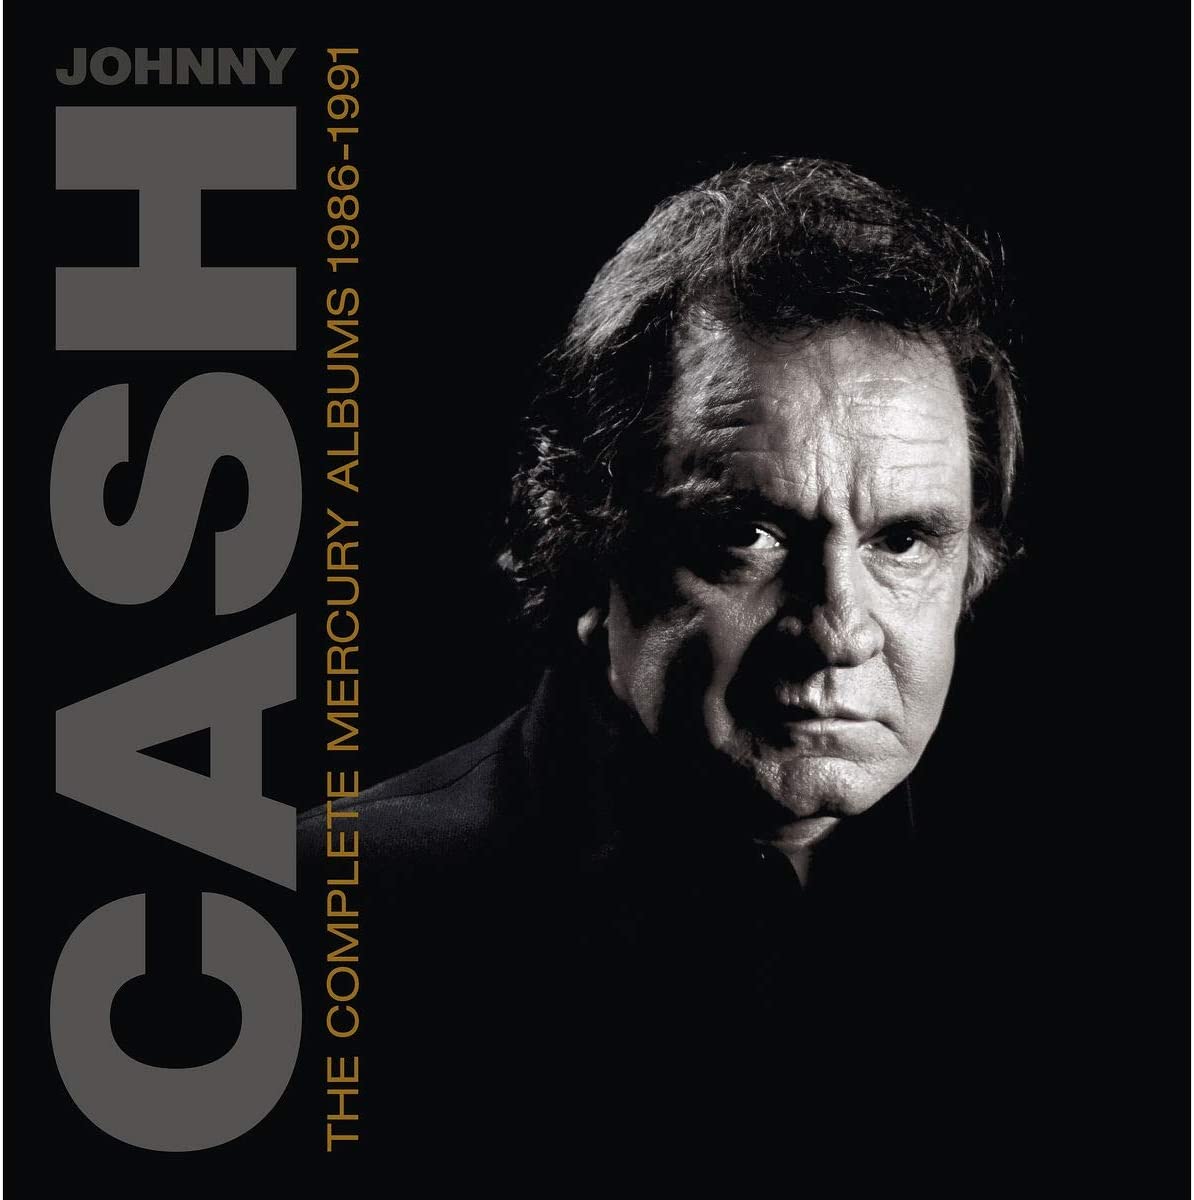 Copertina Vinile 33 giri Johnny Cash di 